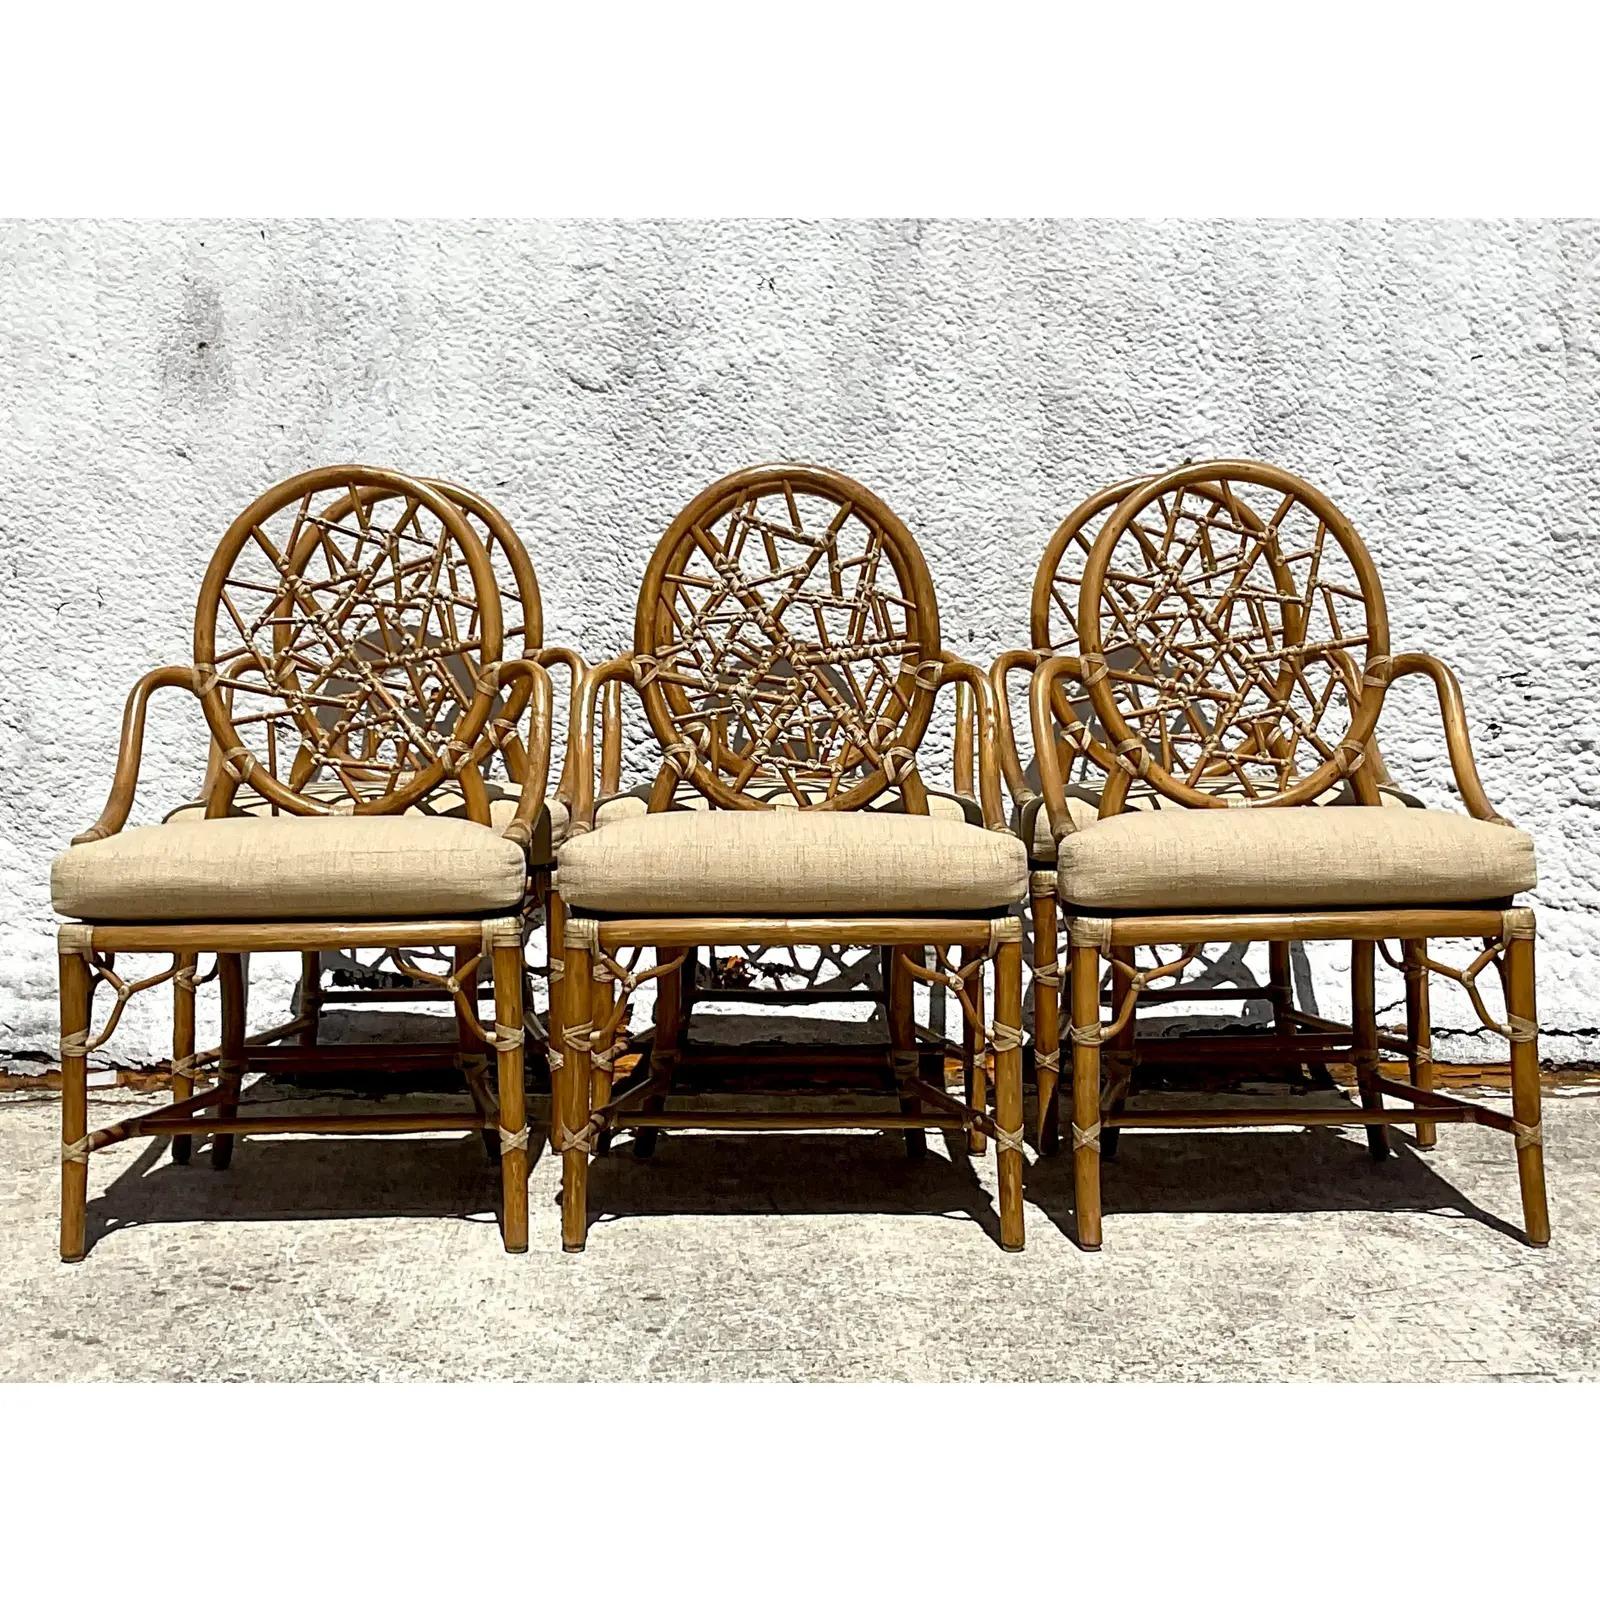 Philippine Vintage Coastal McGuire “Cracked Ice” Rattan Dining Chairs - Set of 6